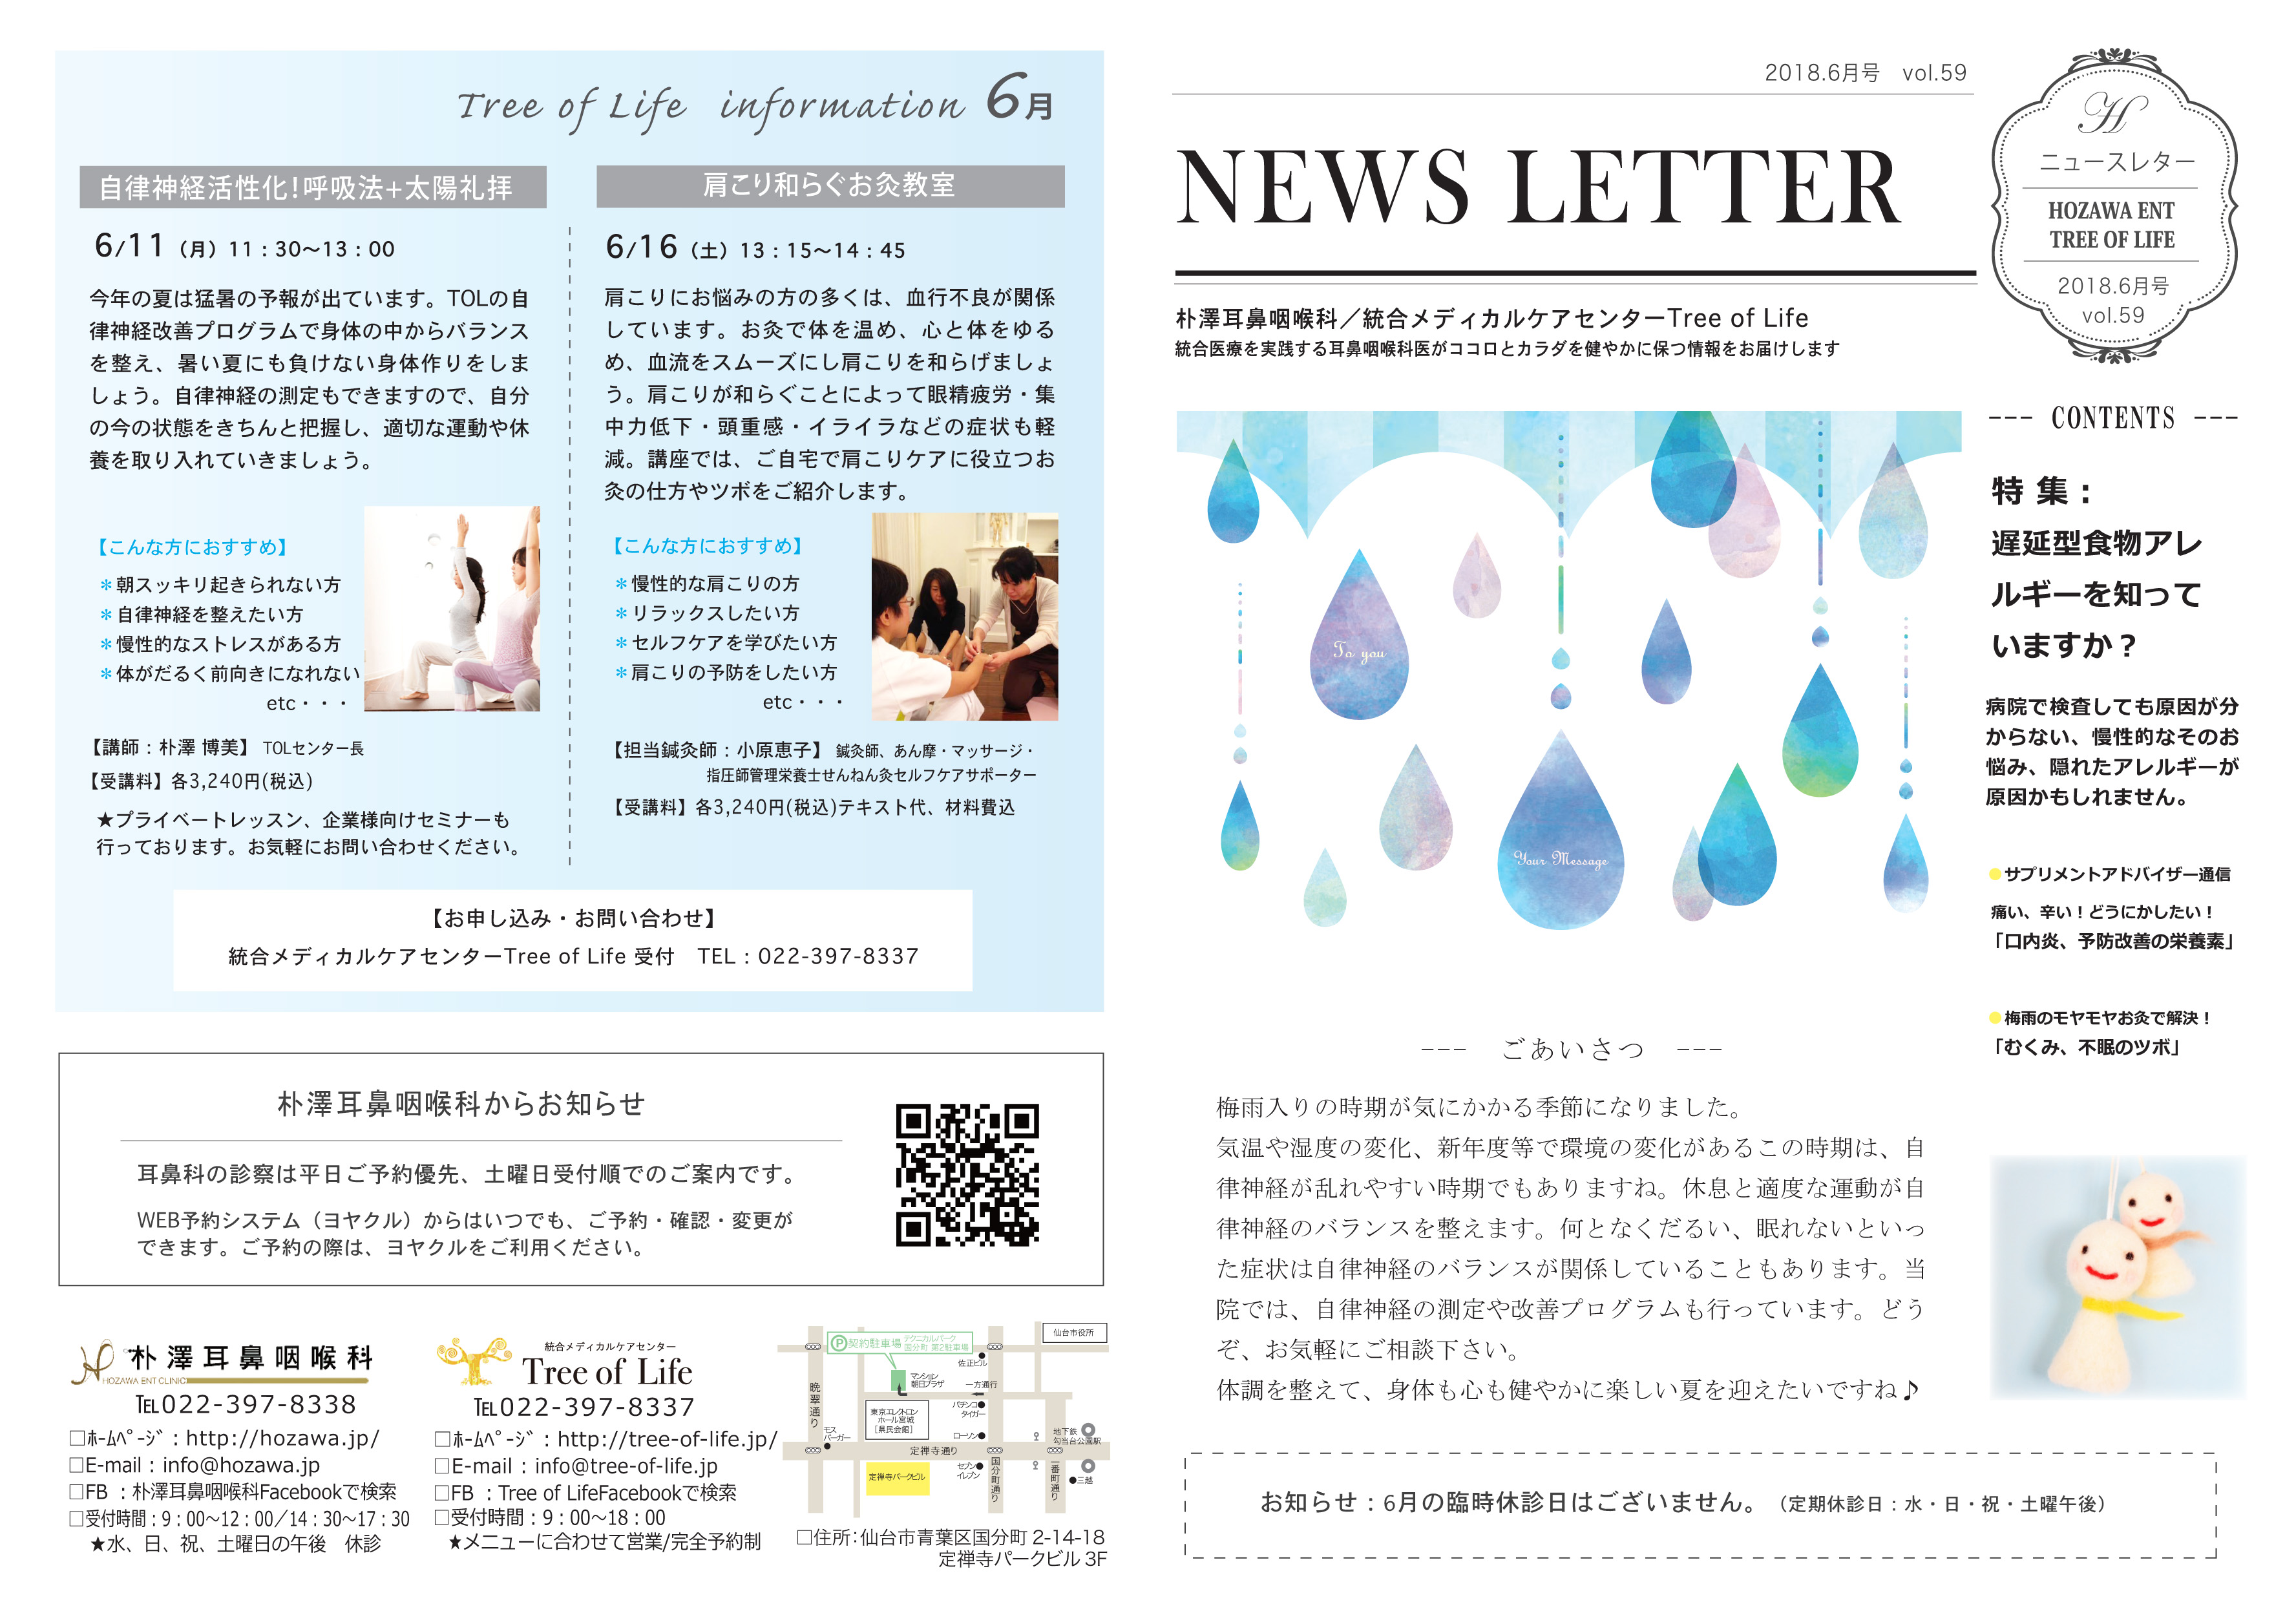 http://hozawa.jp/news/news_img/newsletter_omote301.jpg